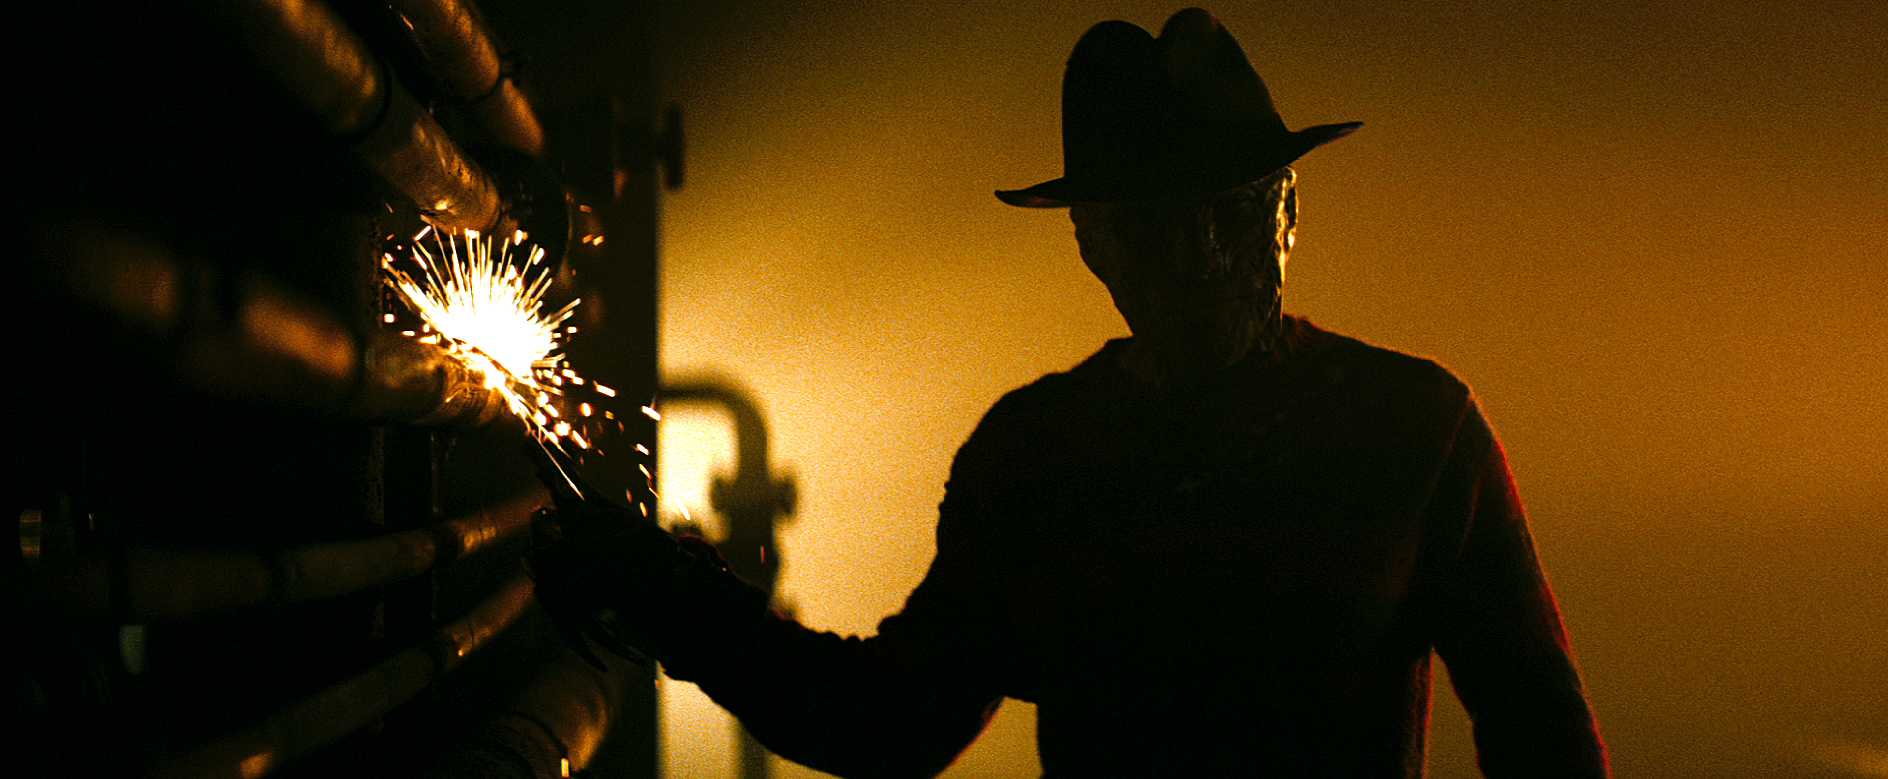 boom reviews - A Nightmare on Elm Street image